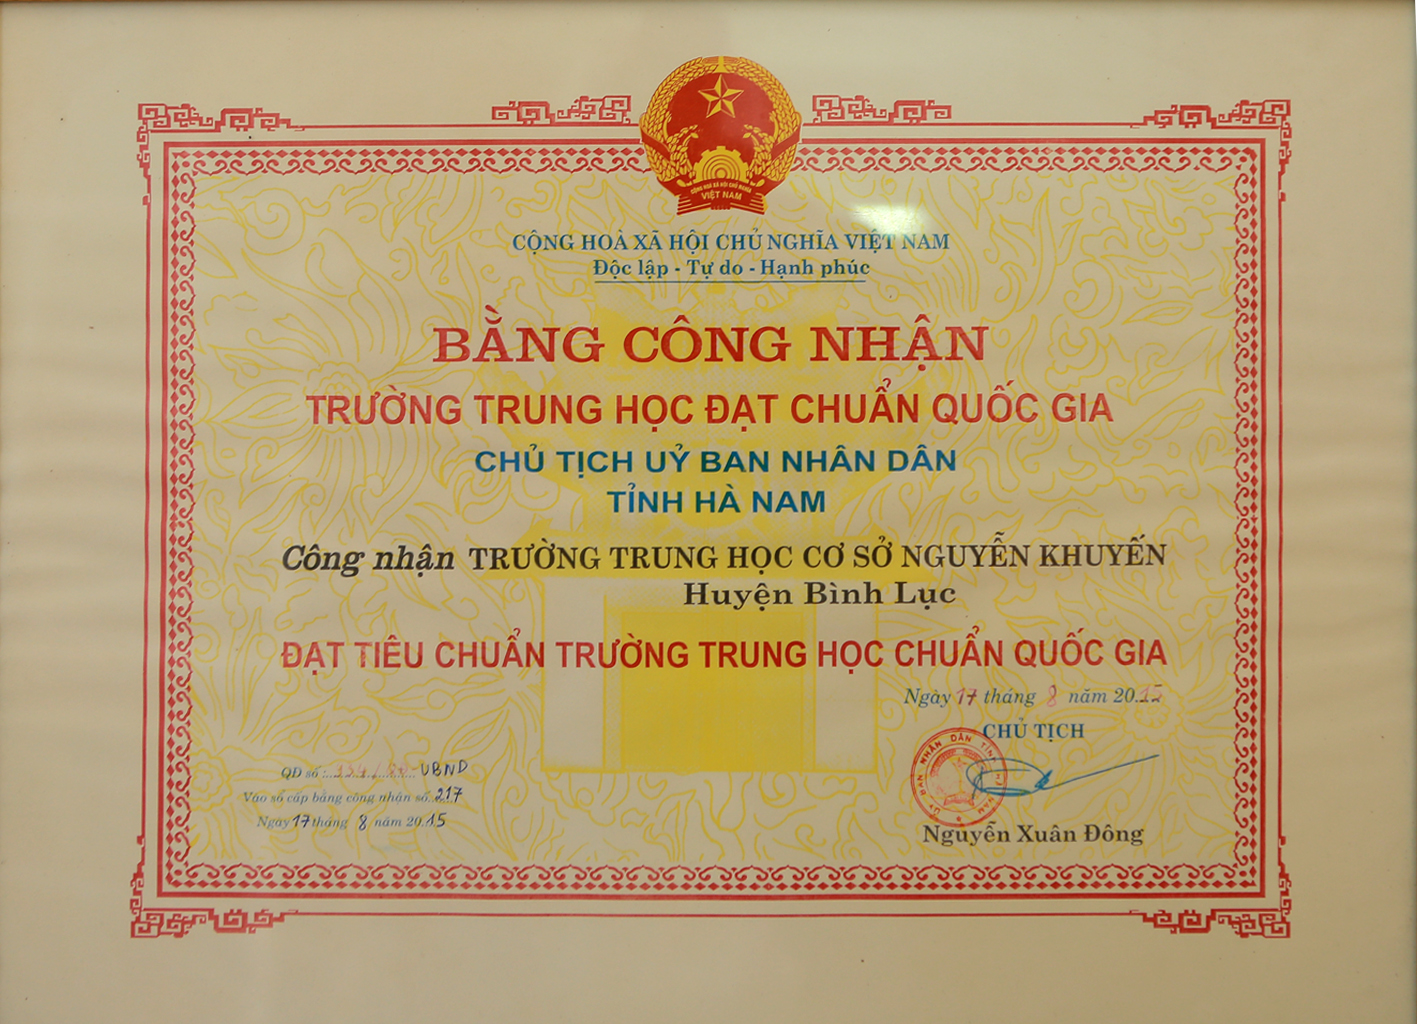 BANG CONG NHAN TRUONG CHUAN QUOC GIA.jpg